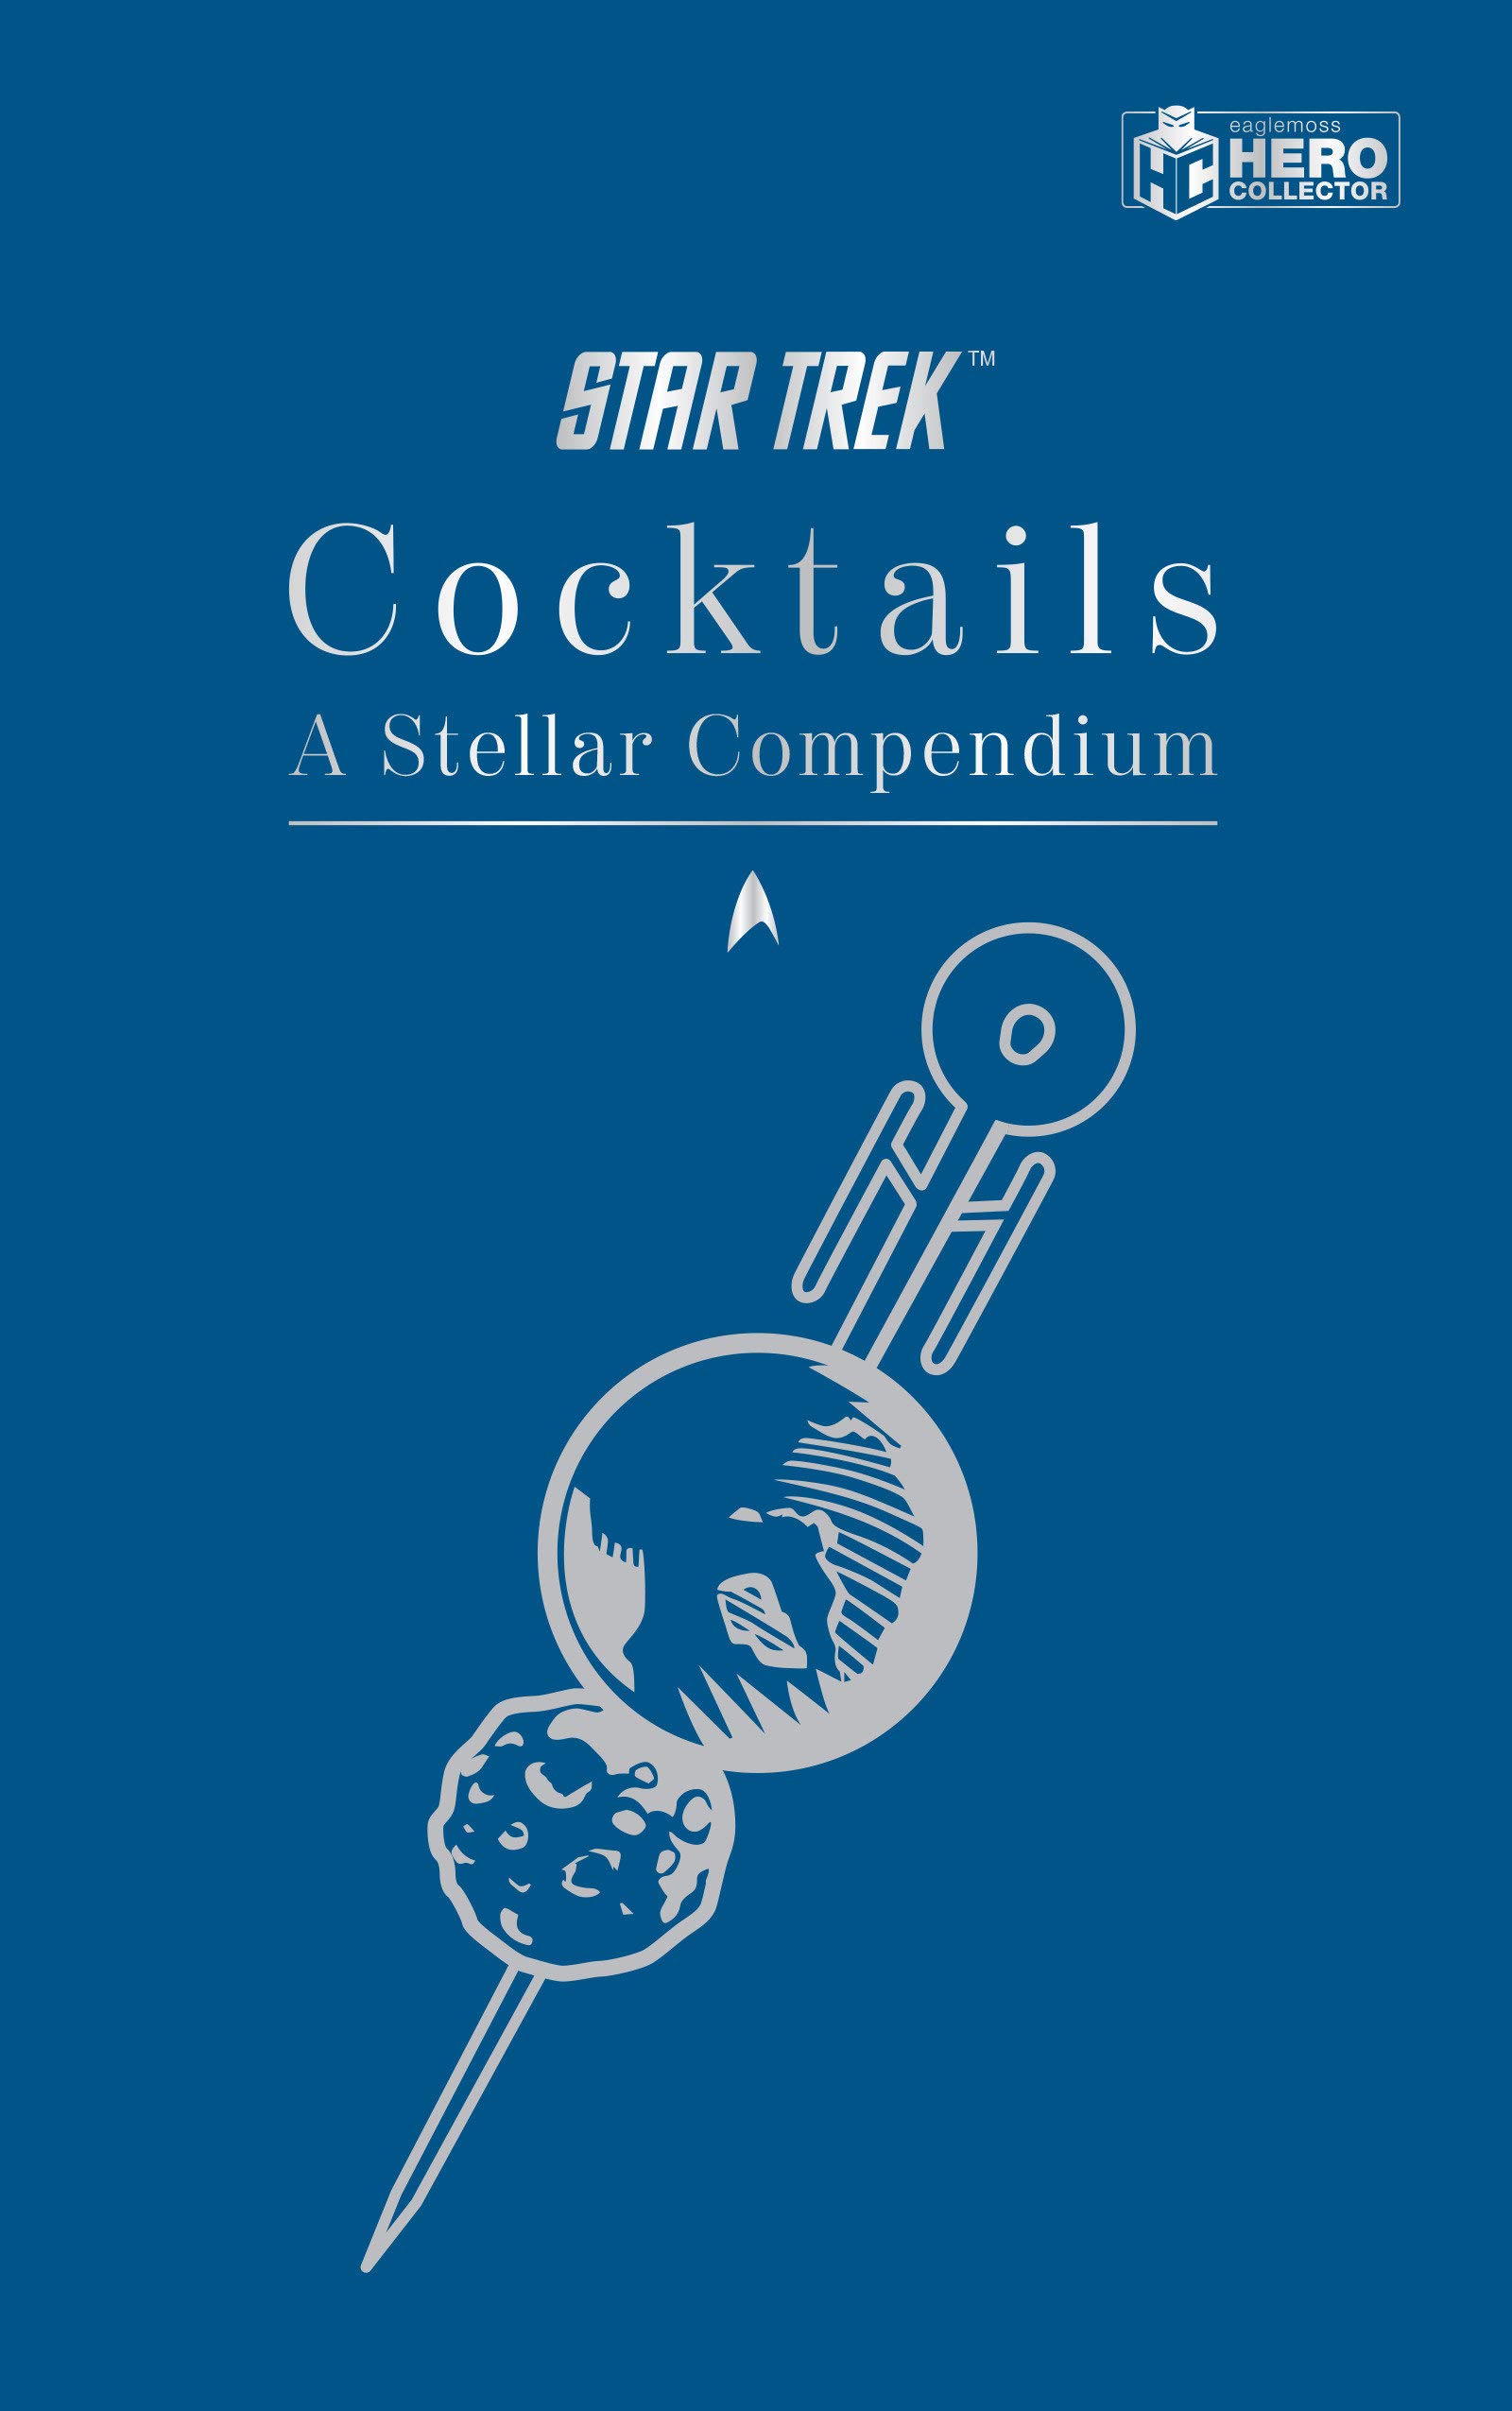 star trek cocktails gift idea